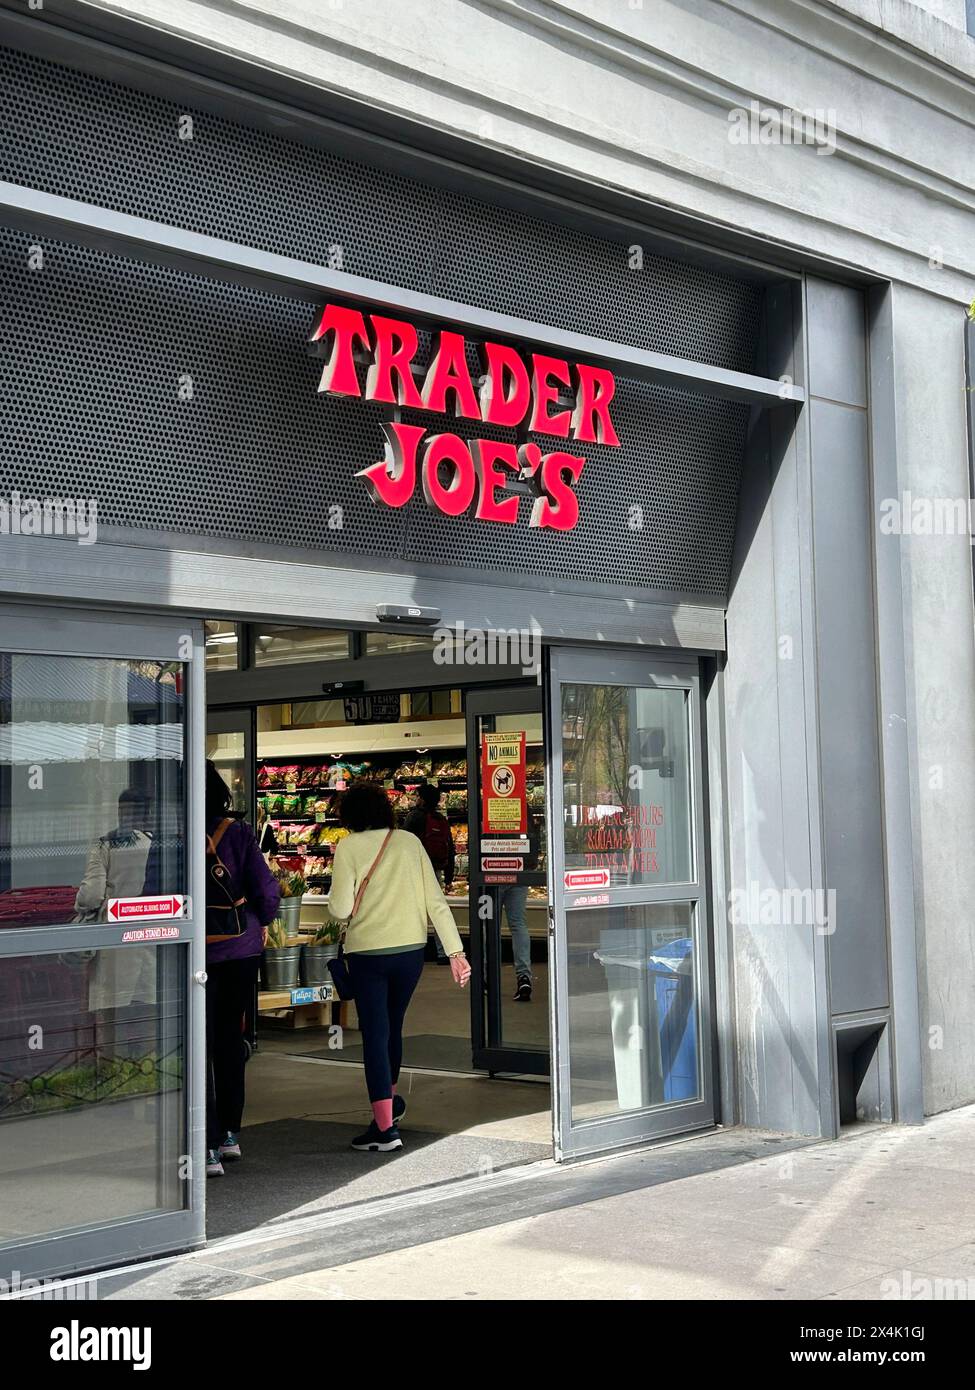 Trader Joe's supermarket, exterior view, New York City, New York, USA Stock Photo